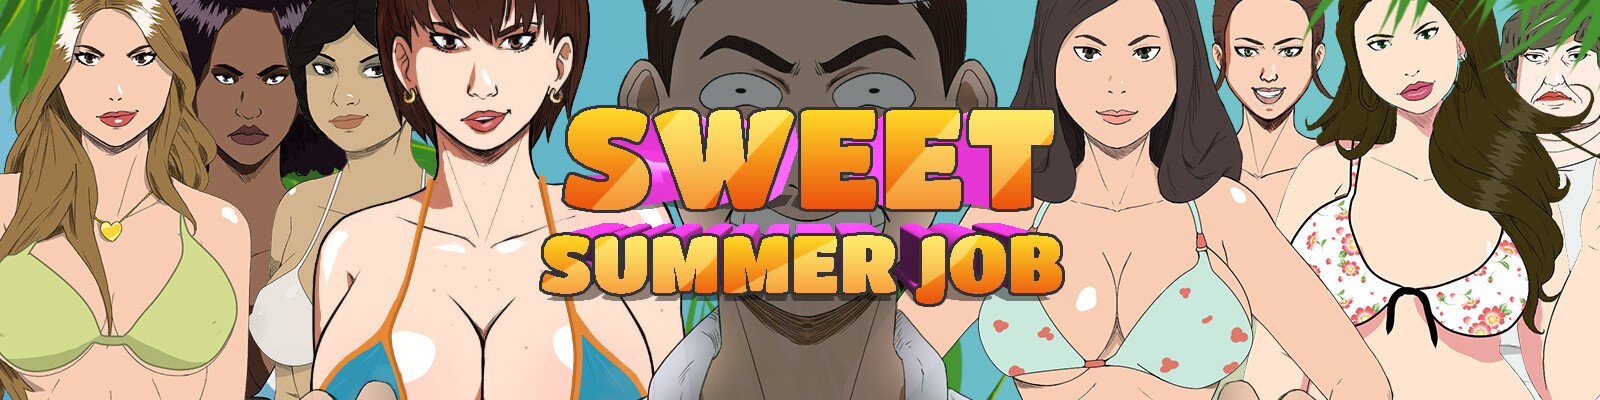 Sweet Summer Job Main Image